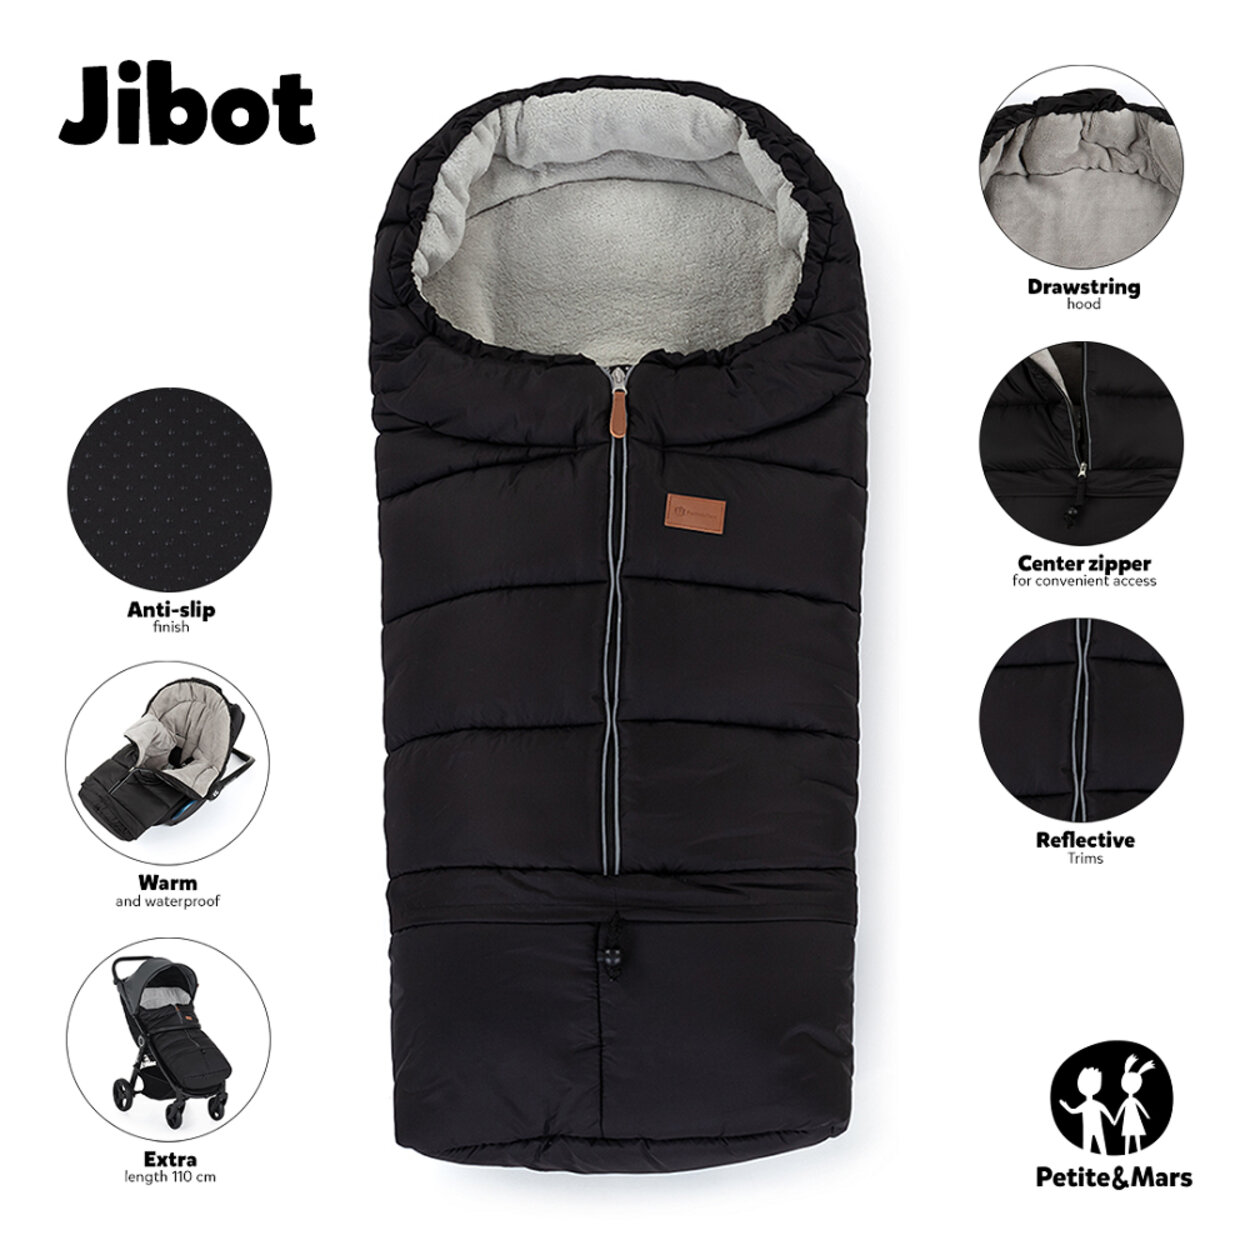 PETITE&MARS Set zimný fusak Jibot 3v1 + rukavice na kočík Jasie Ocean Blue  | Predeti.sk